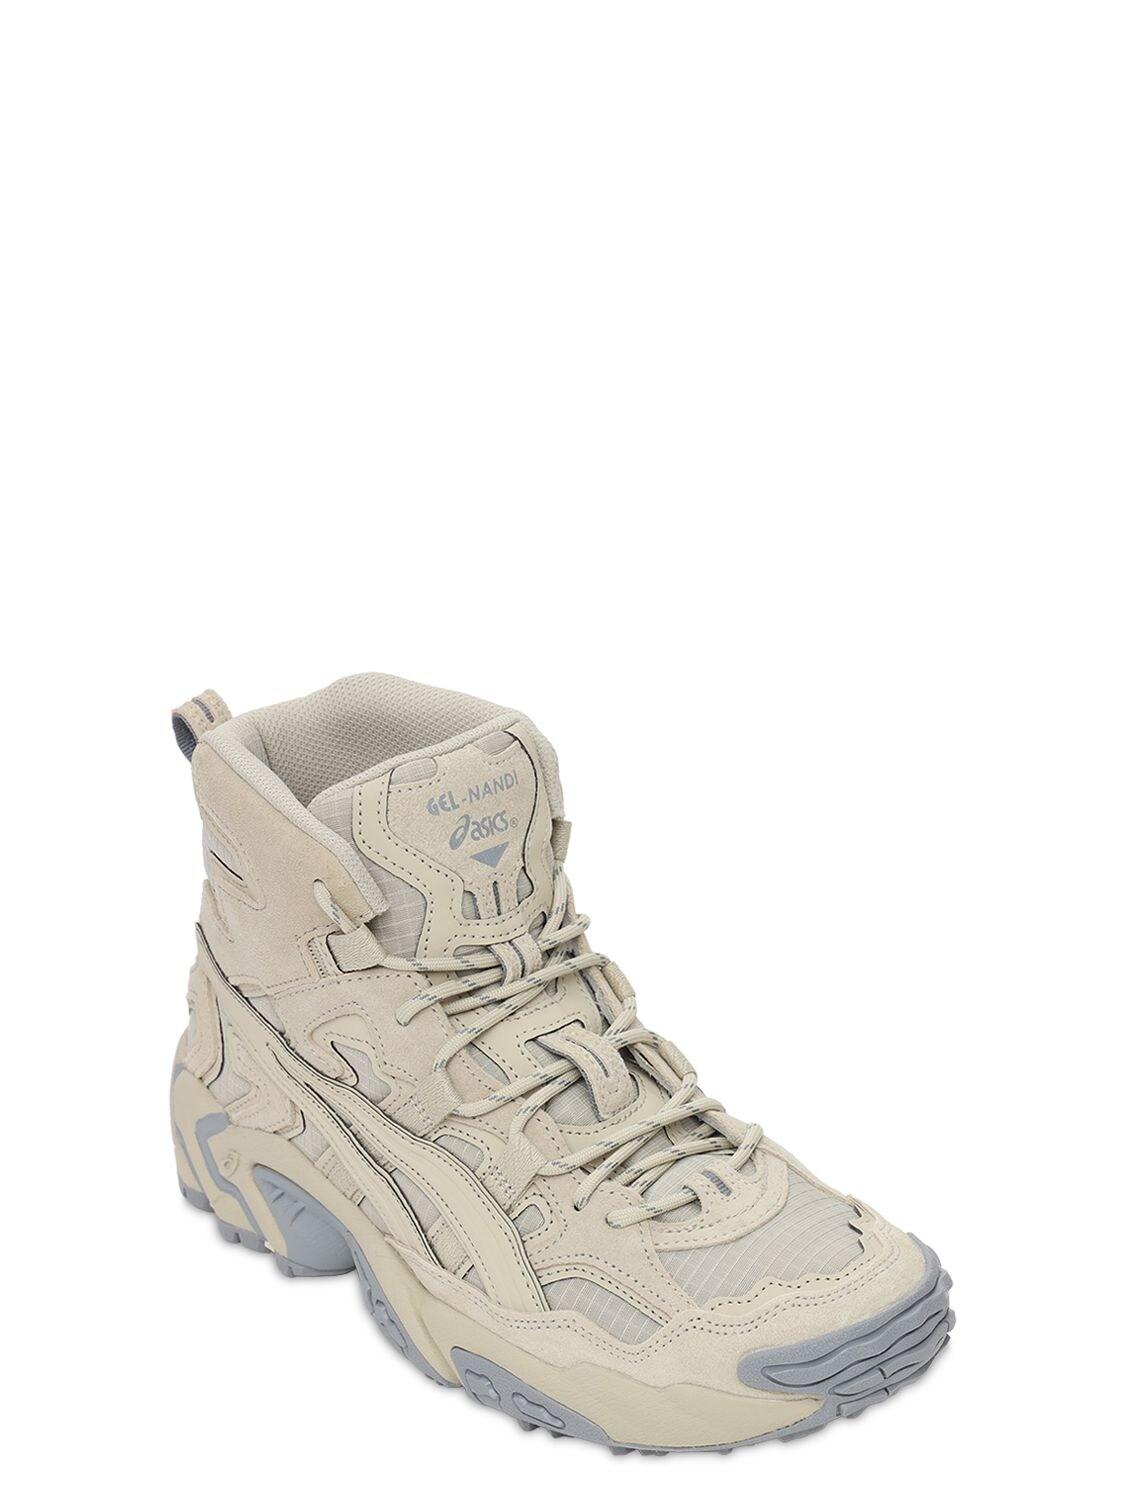 Asics Gel-nandi Mt Sneaker Boots in Natural for Men | Lyst